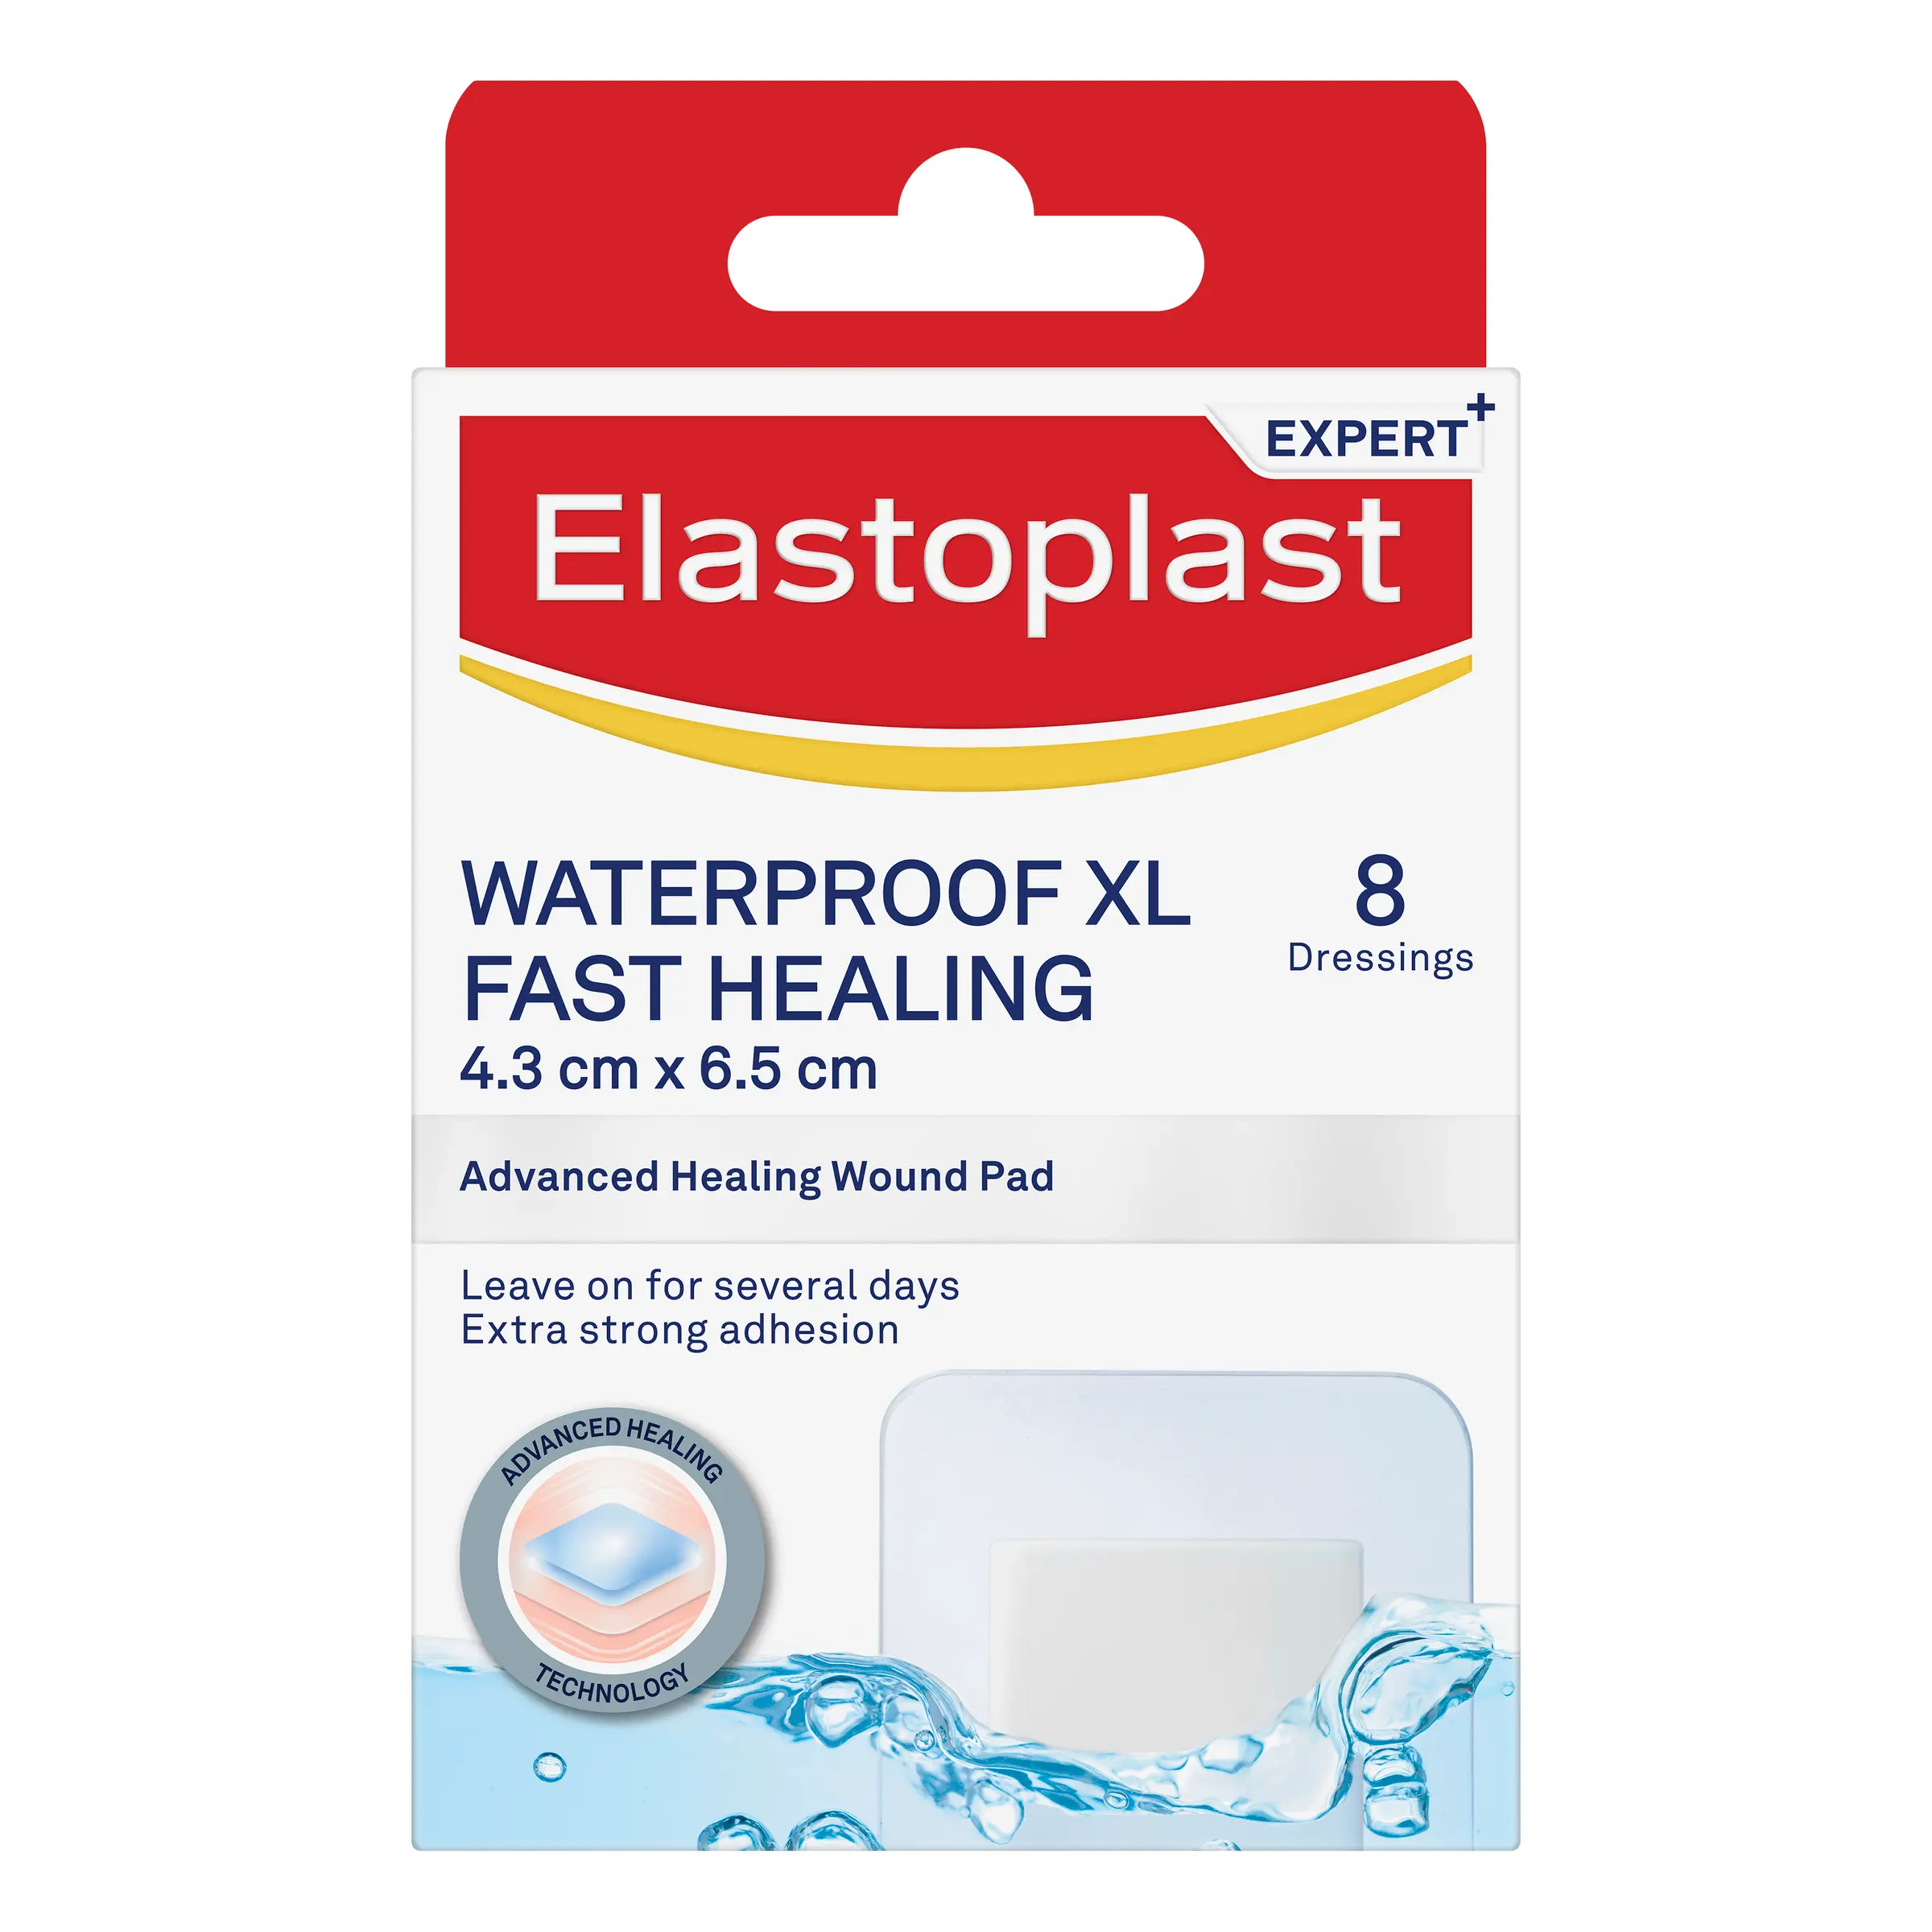 Packshot of Hansaplast Aqua Protect XL Fast Healing Plasters